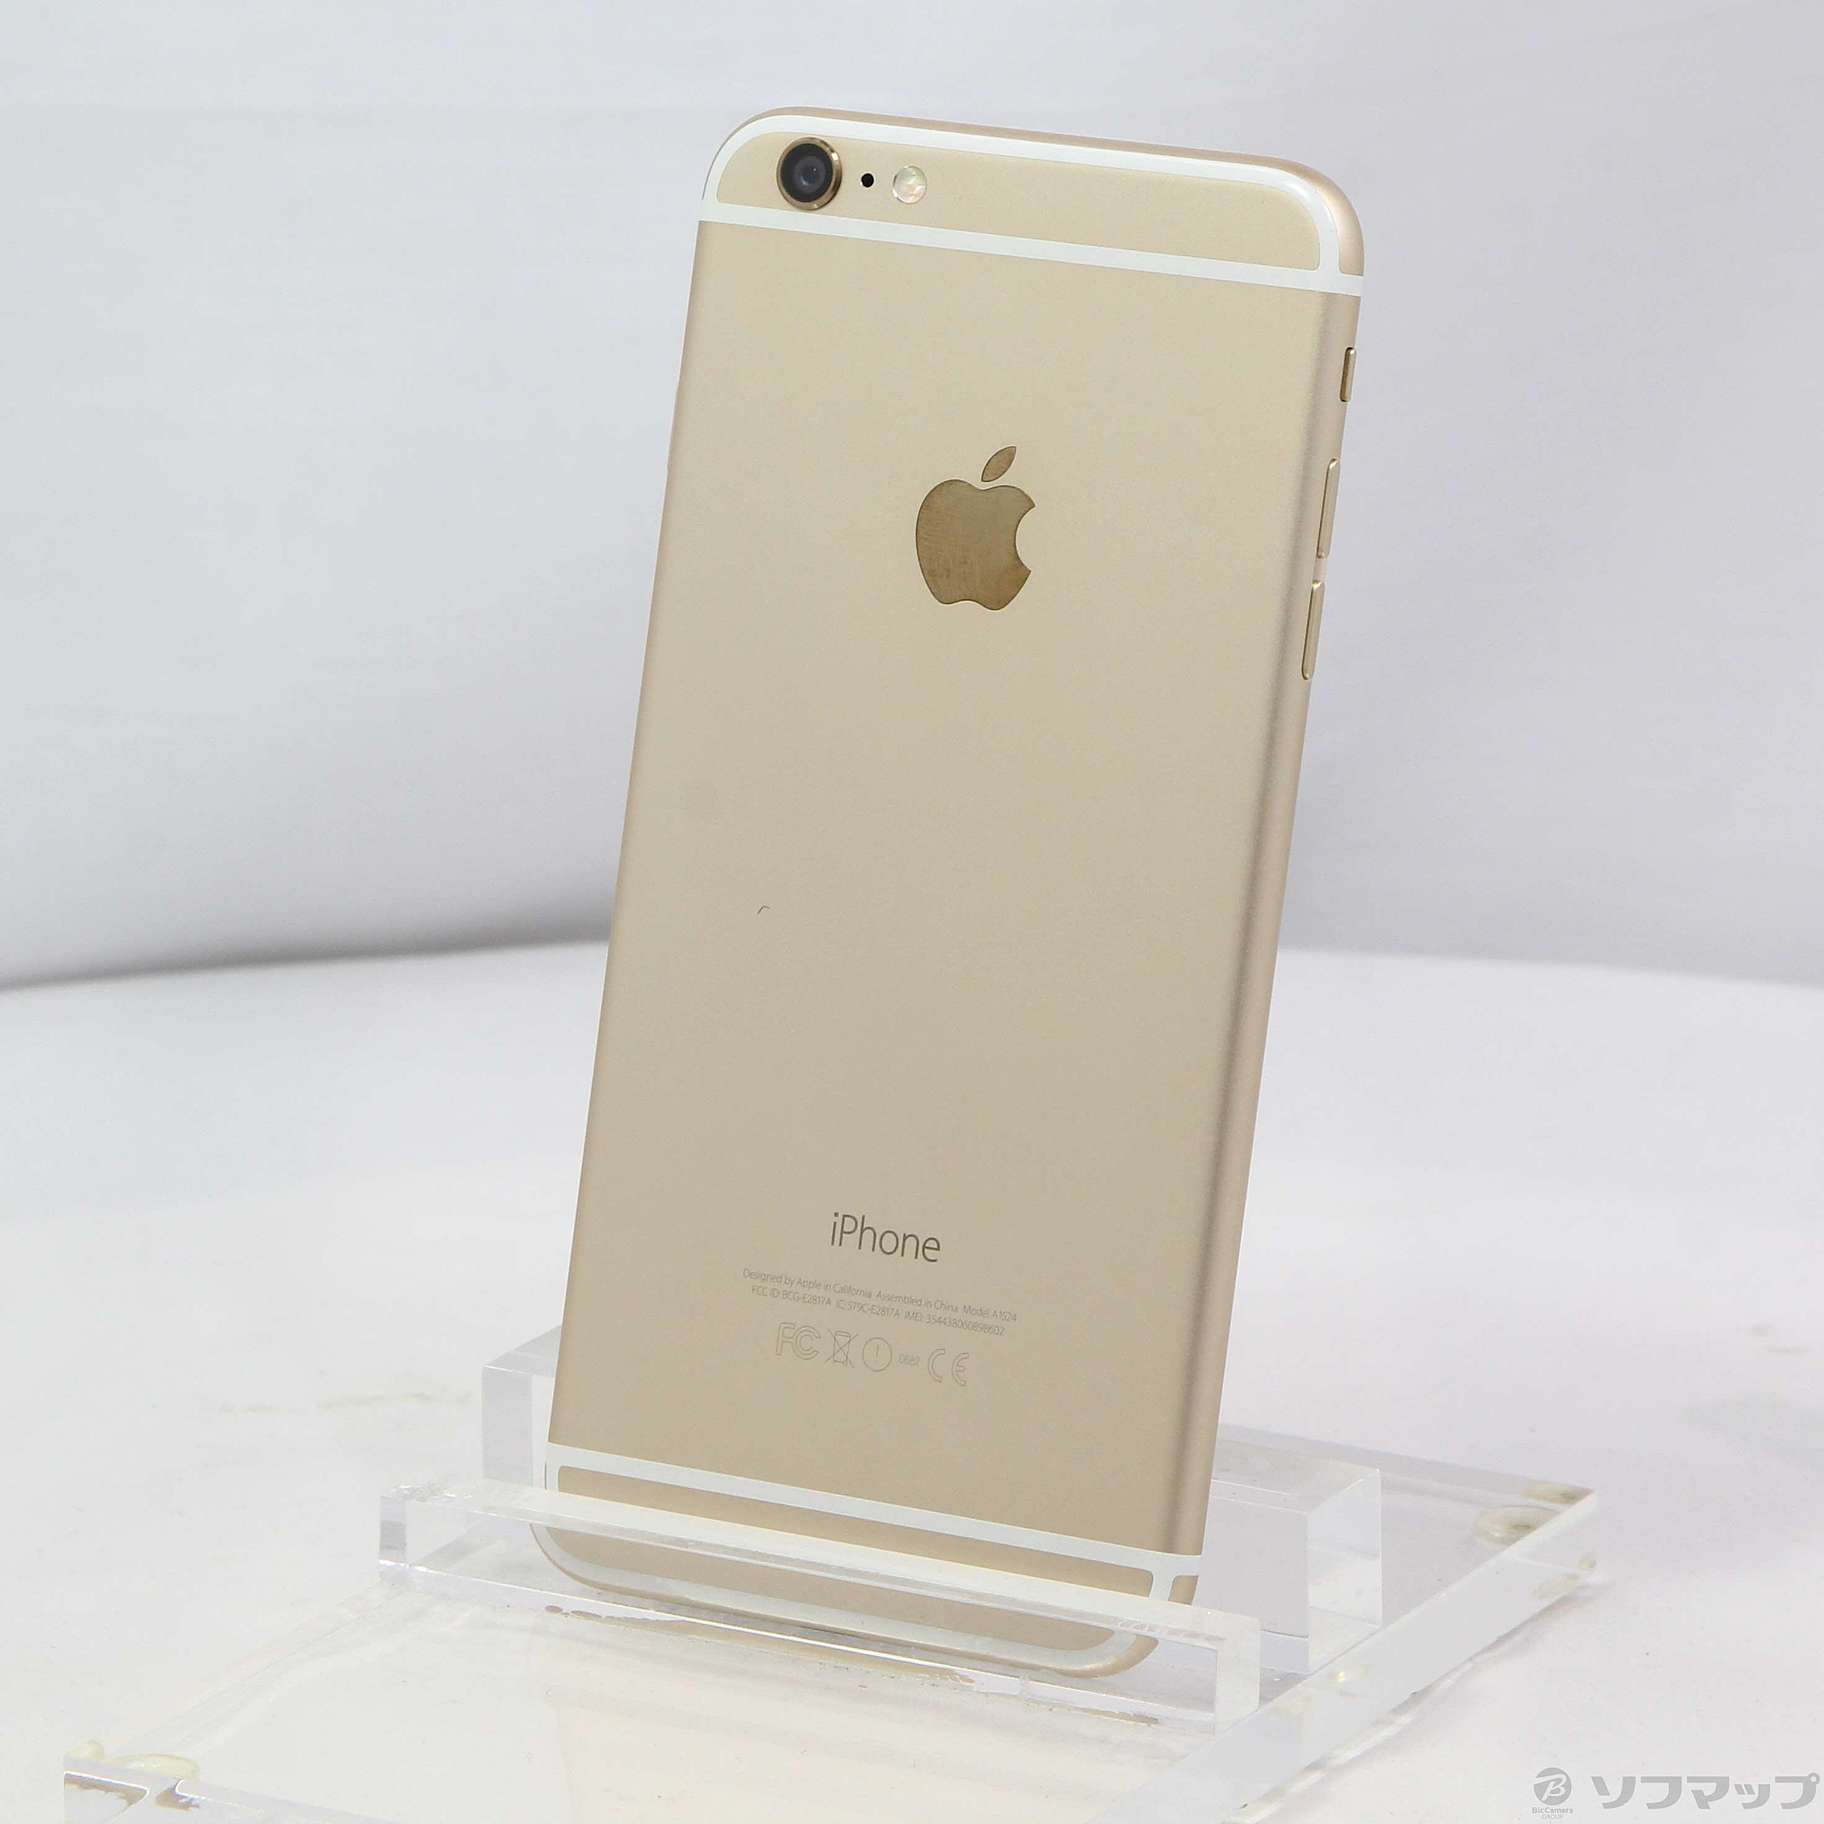 iPhone 6 Plus Gold 128 GB Softbankスマートフォン本体